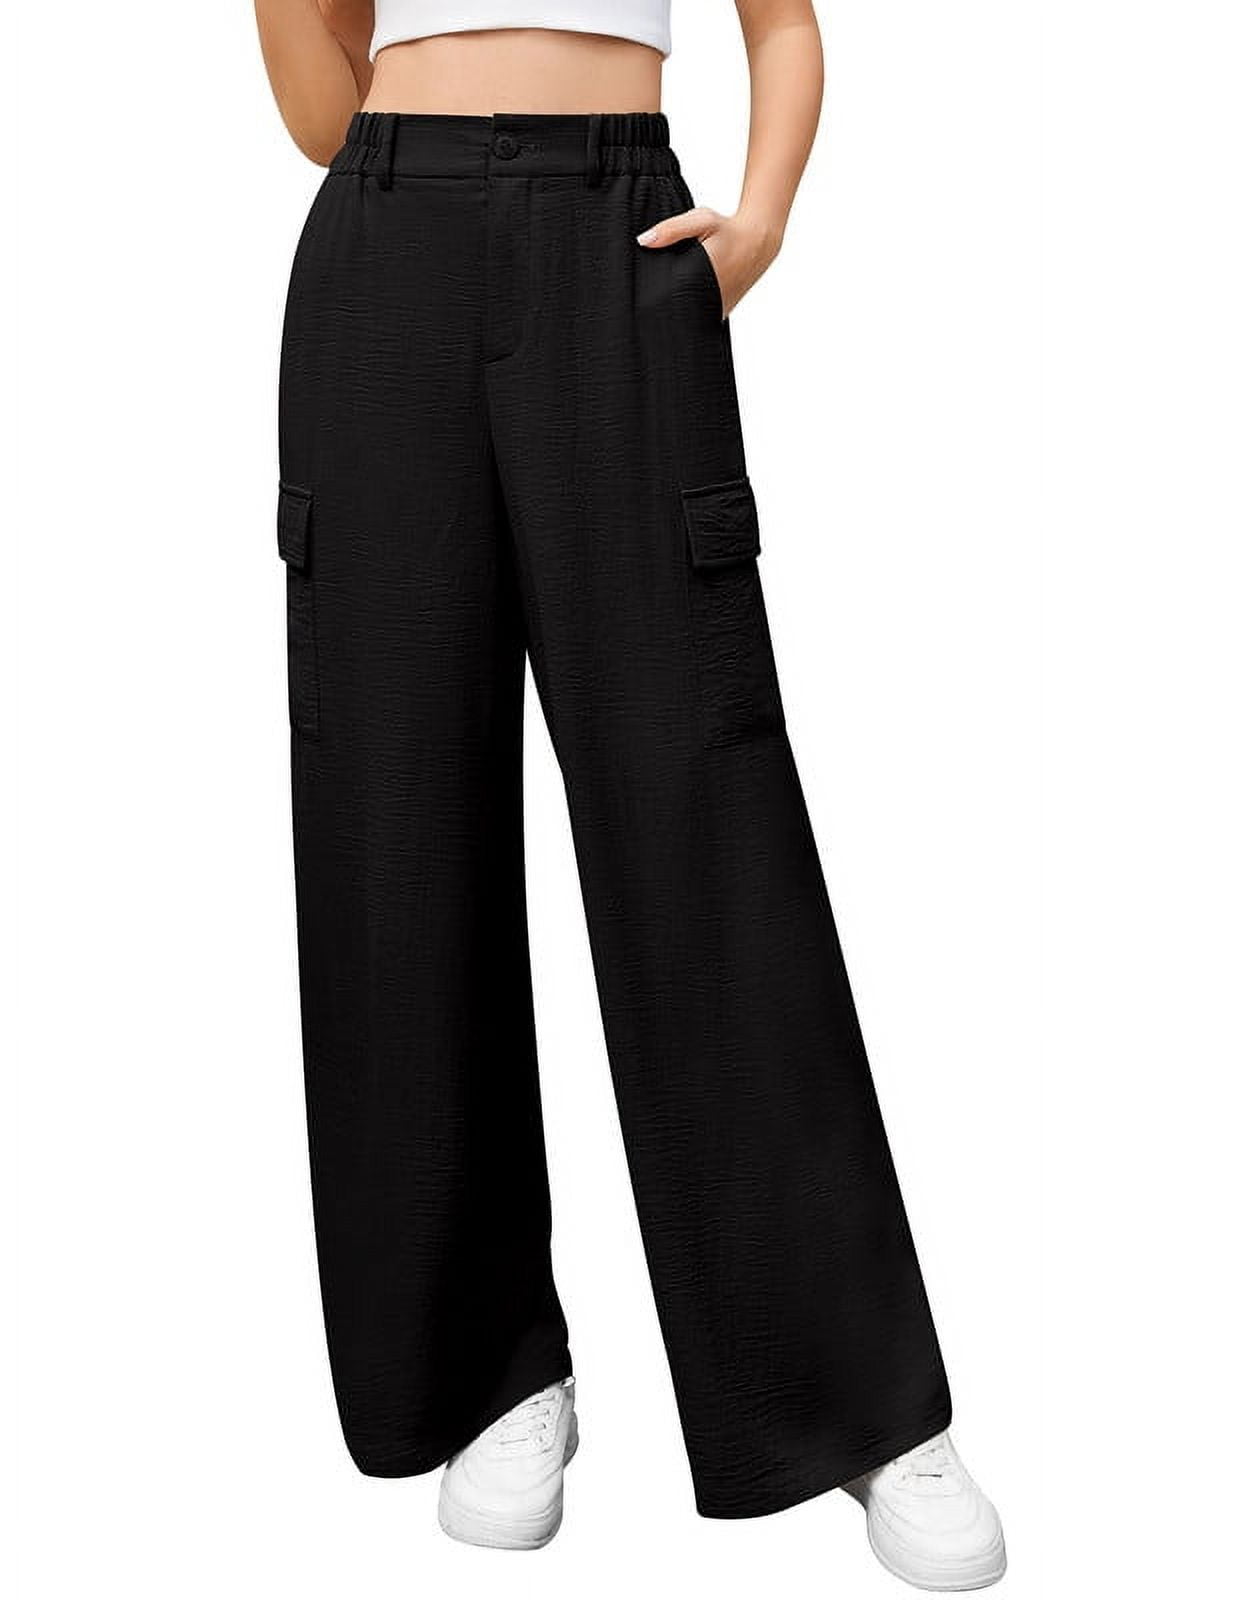 Elbeco Polyester Uniform Women's Pants (Sheriff Green)